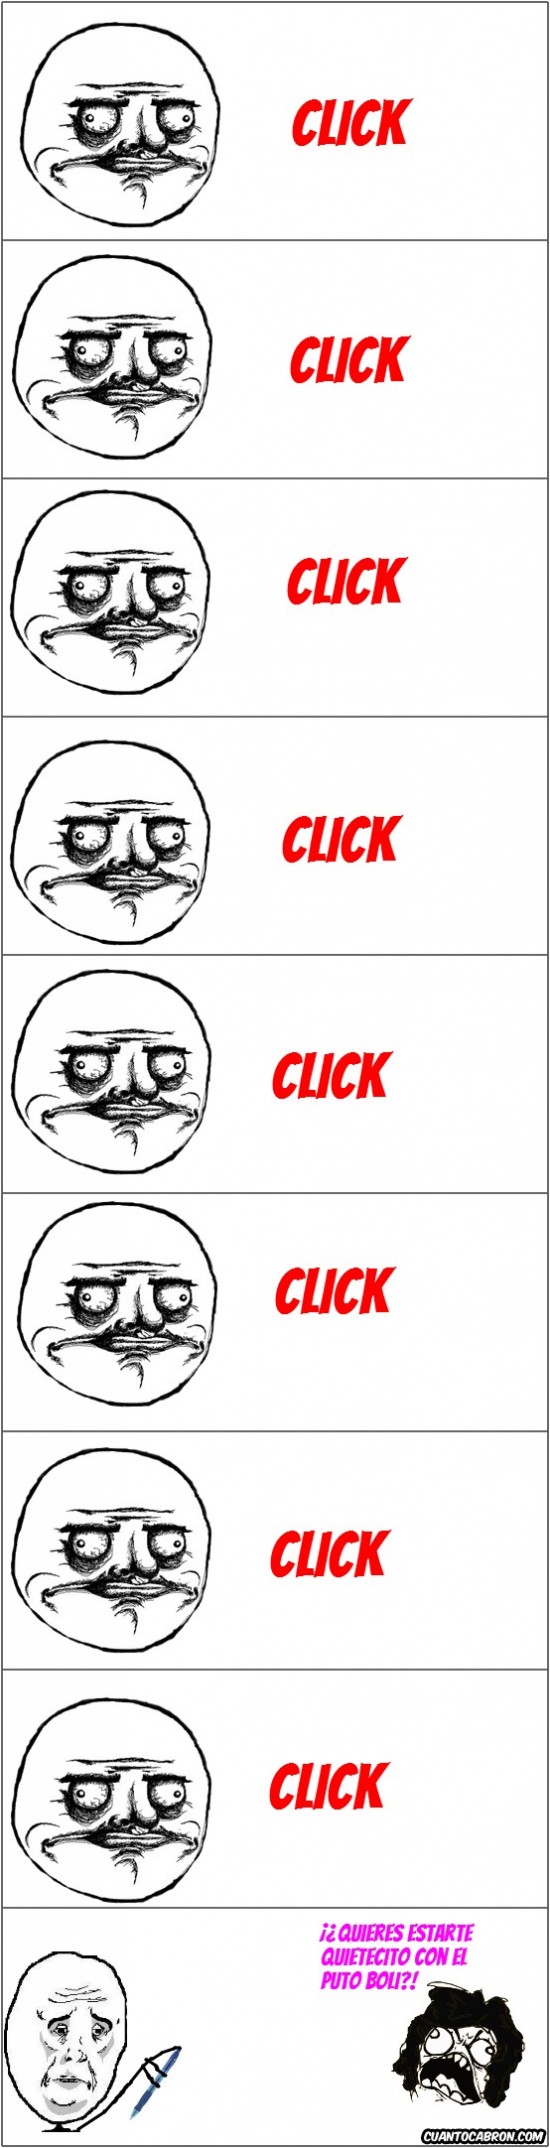 click - meme